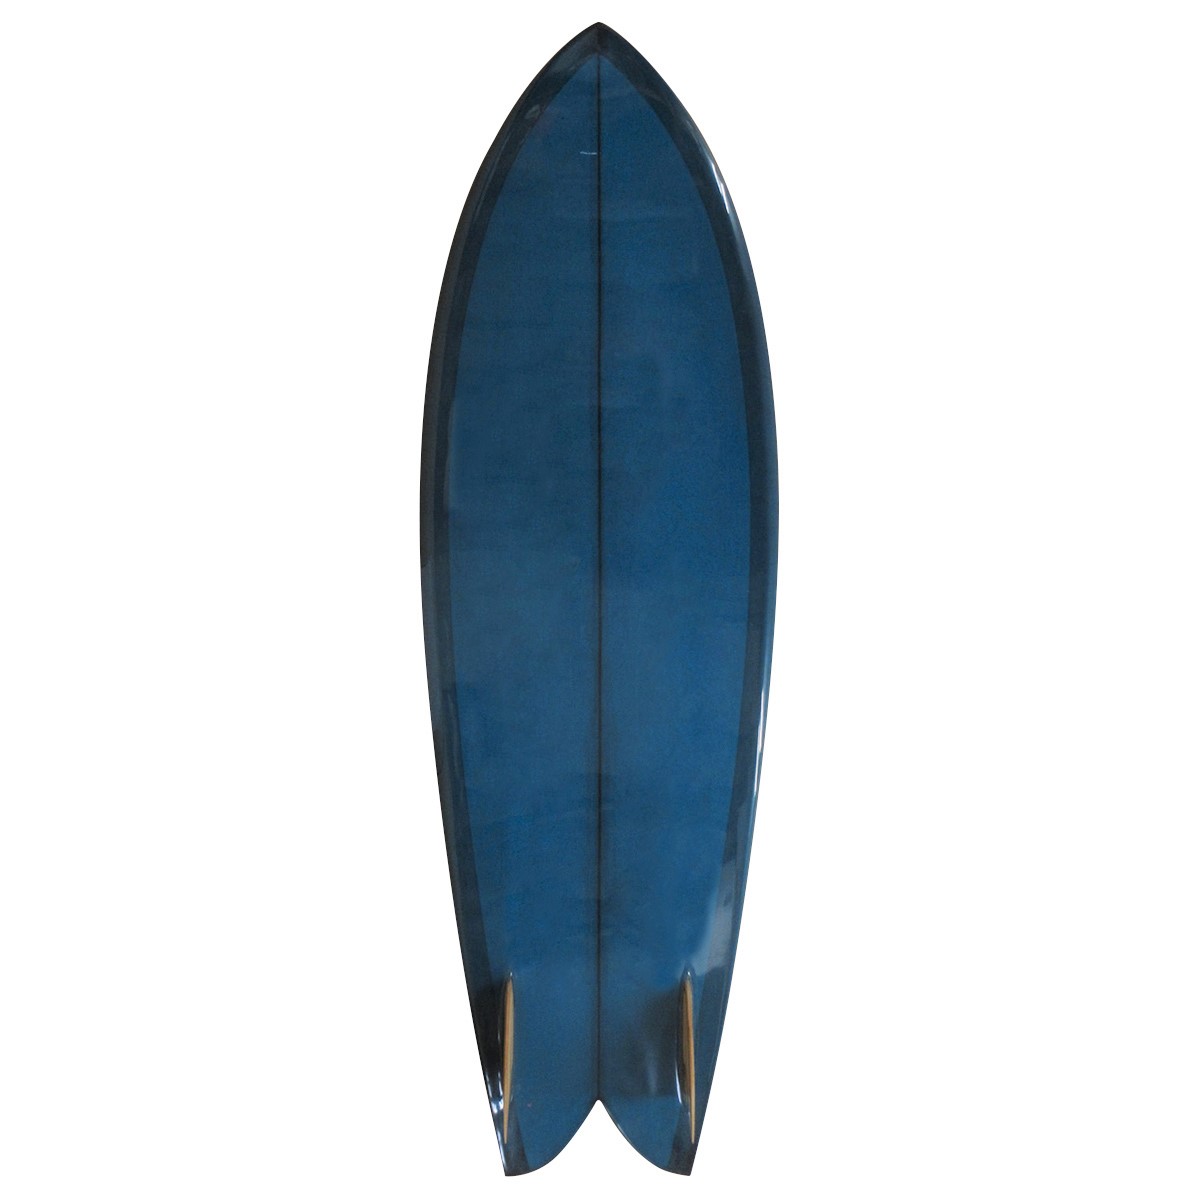 EC Surfboards / TWIN KEEL FISH 5`11